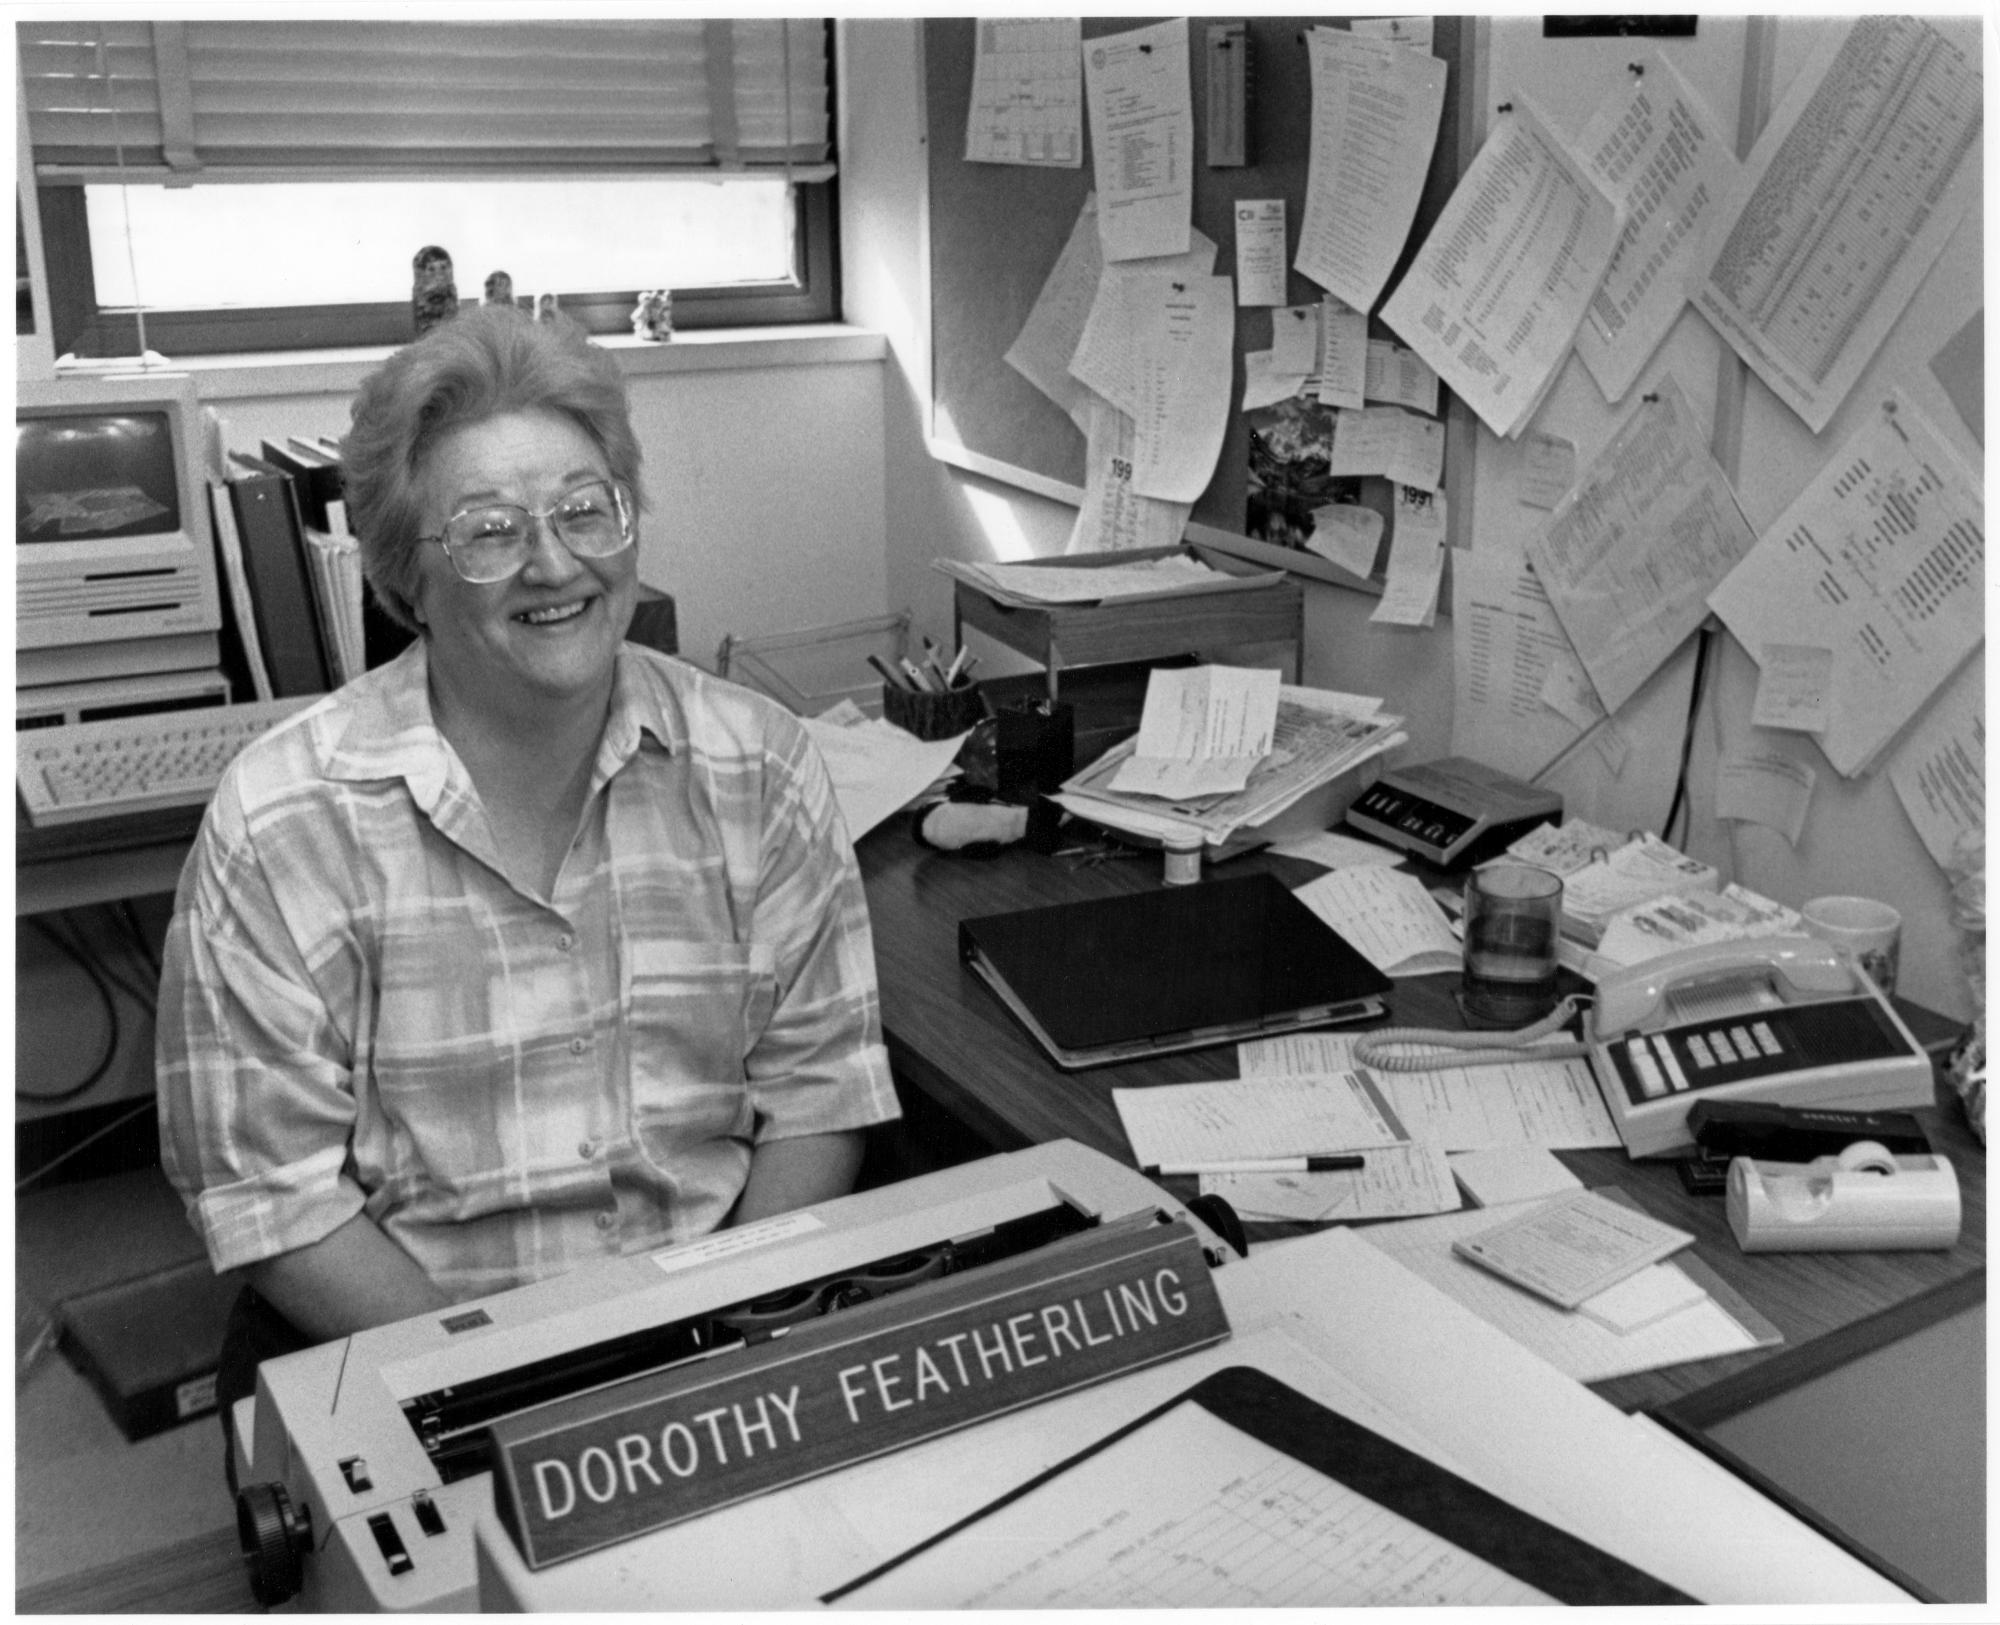 UT Austin Physics Dept (1990) - Dorothy Featherling